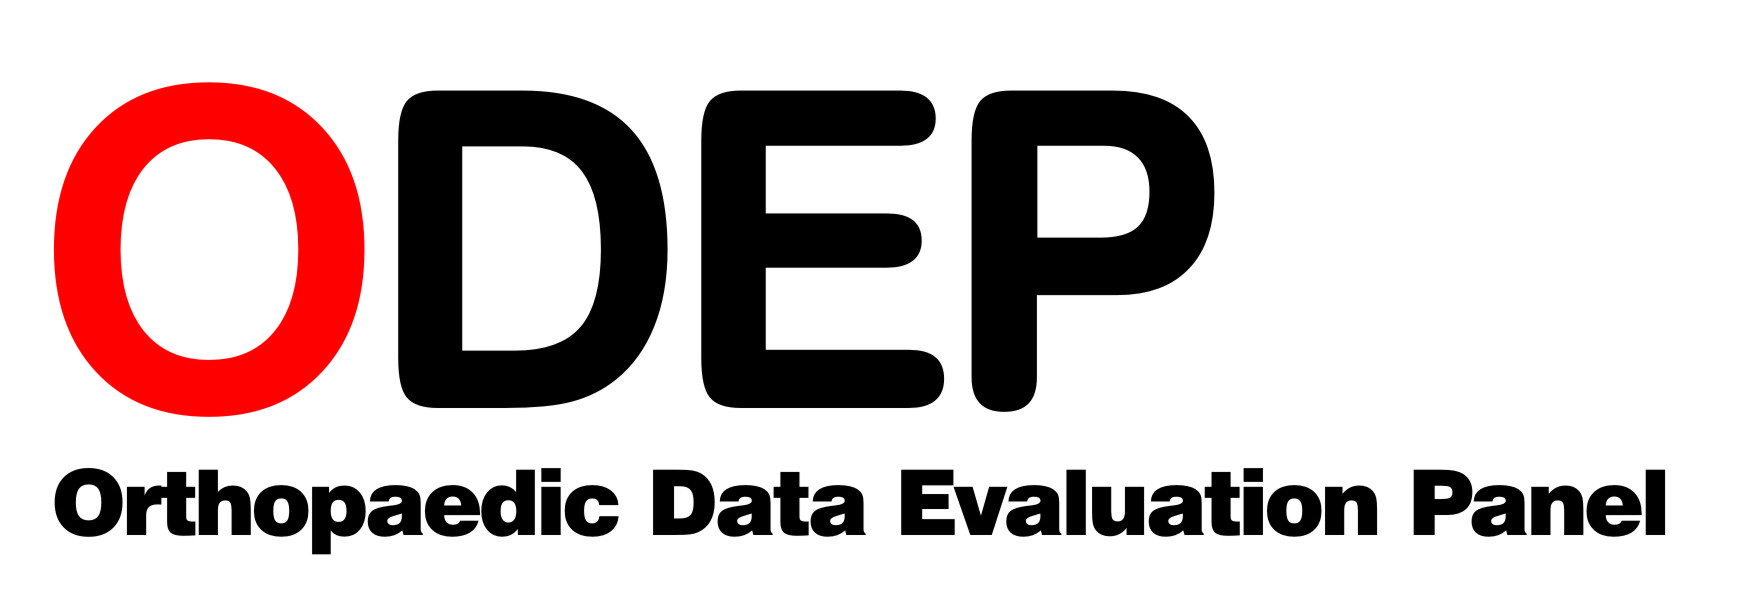 ODEP Orthopaedic Data Evaluation Panel